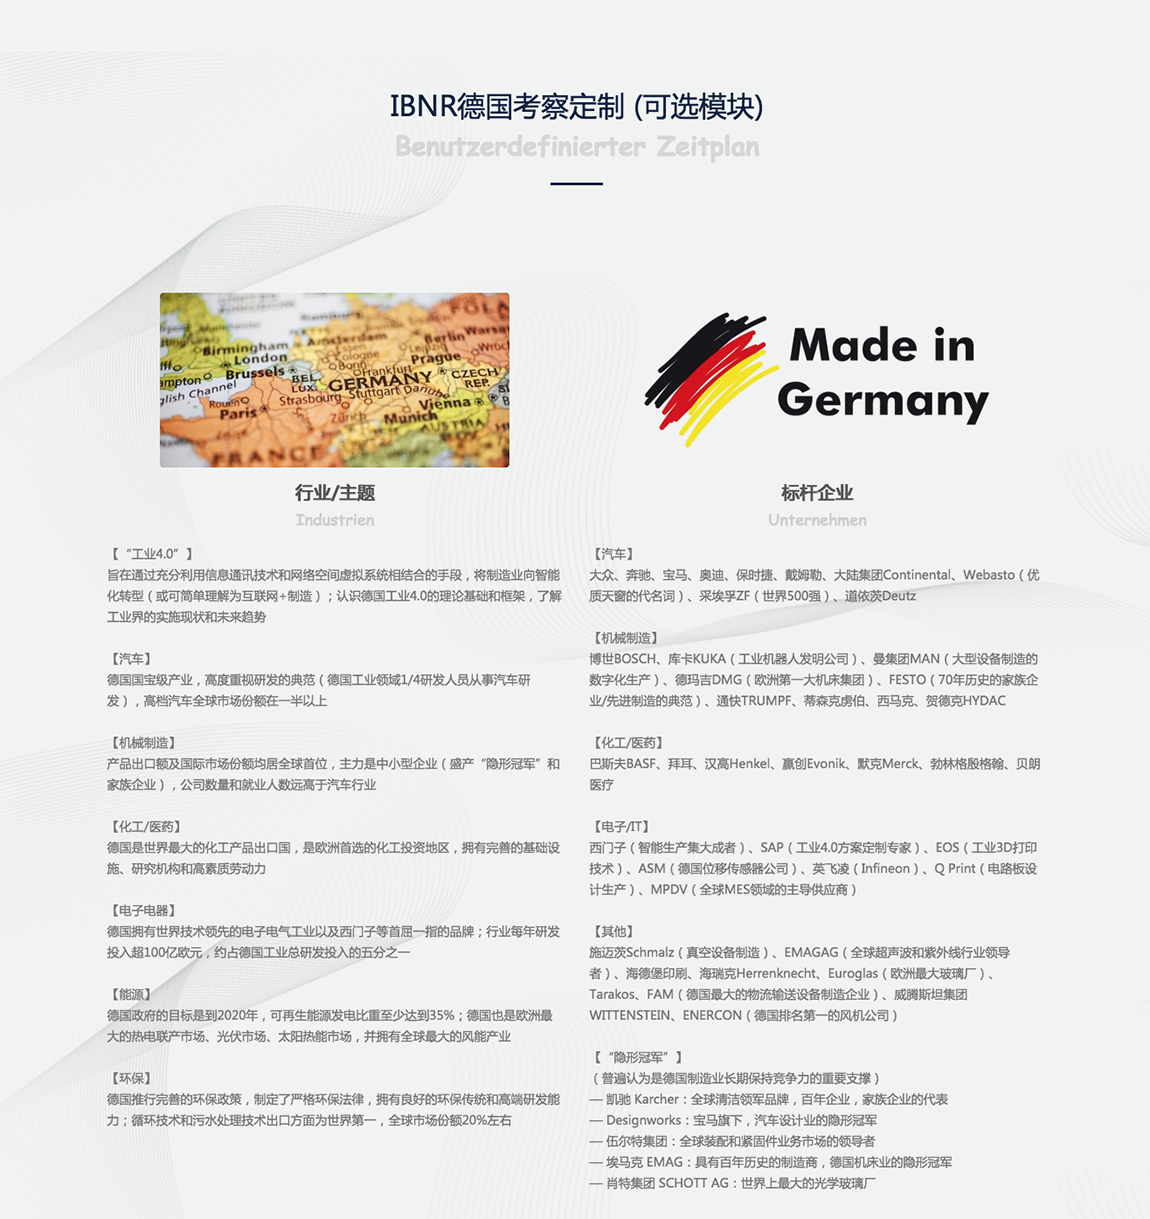 2018 IBNR“德国之芯”工业4.0考察